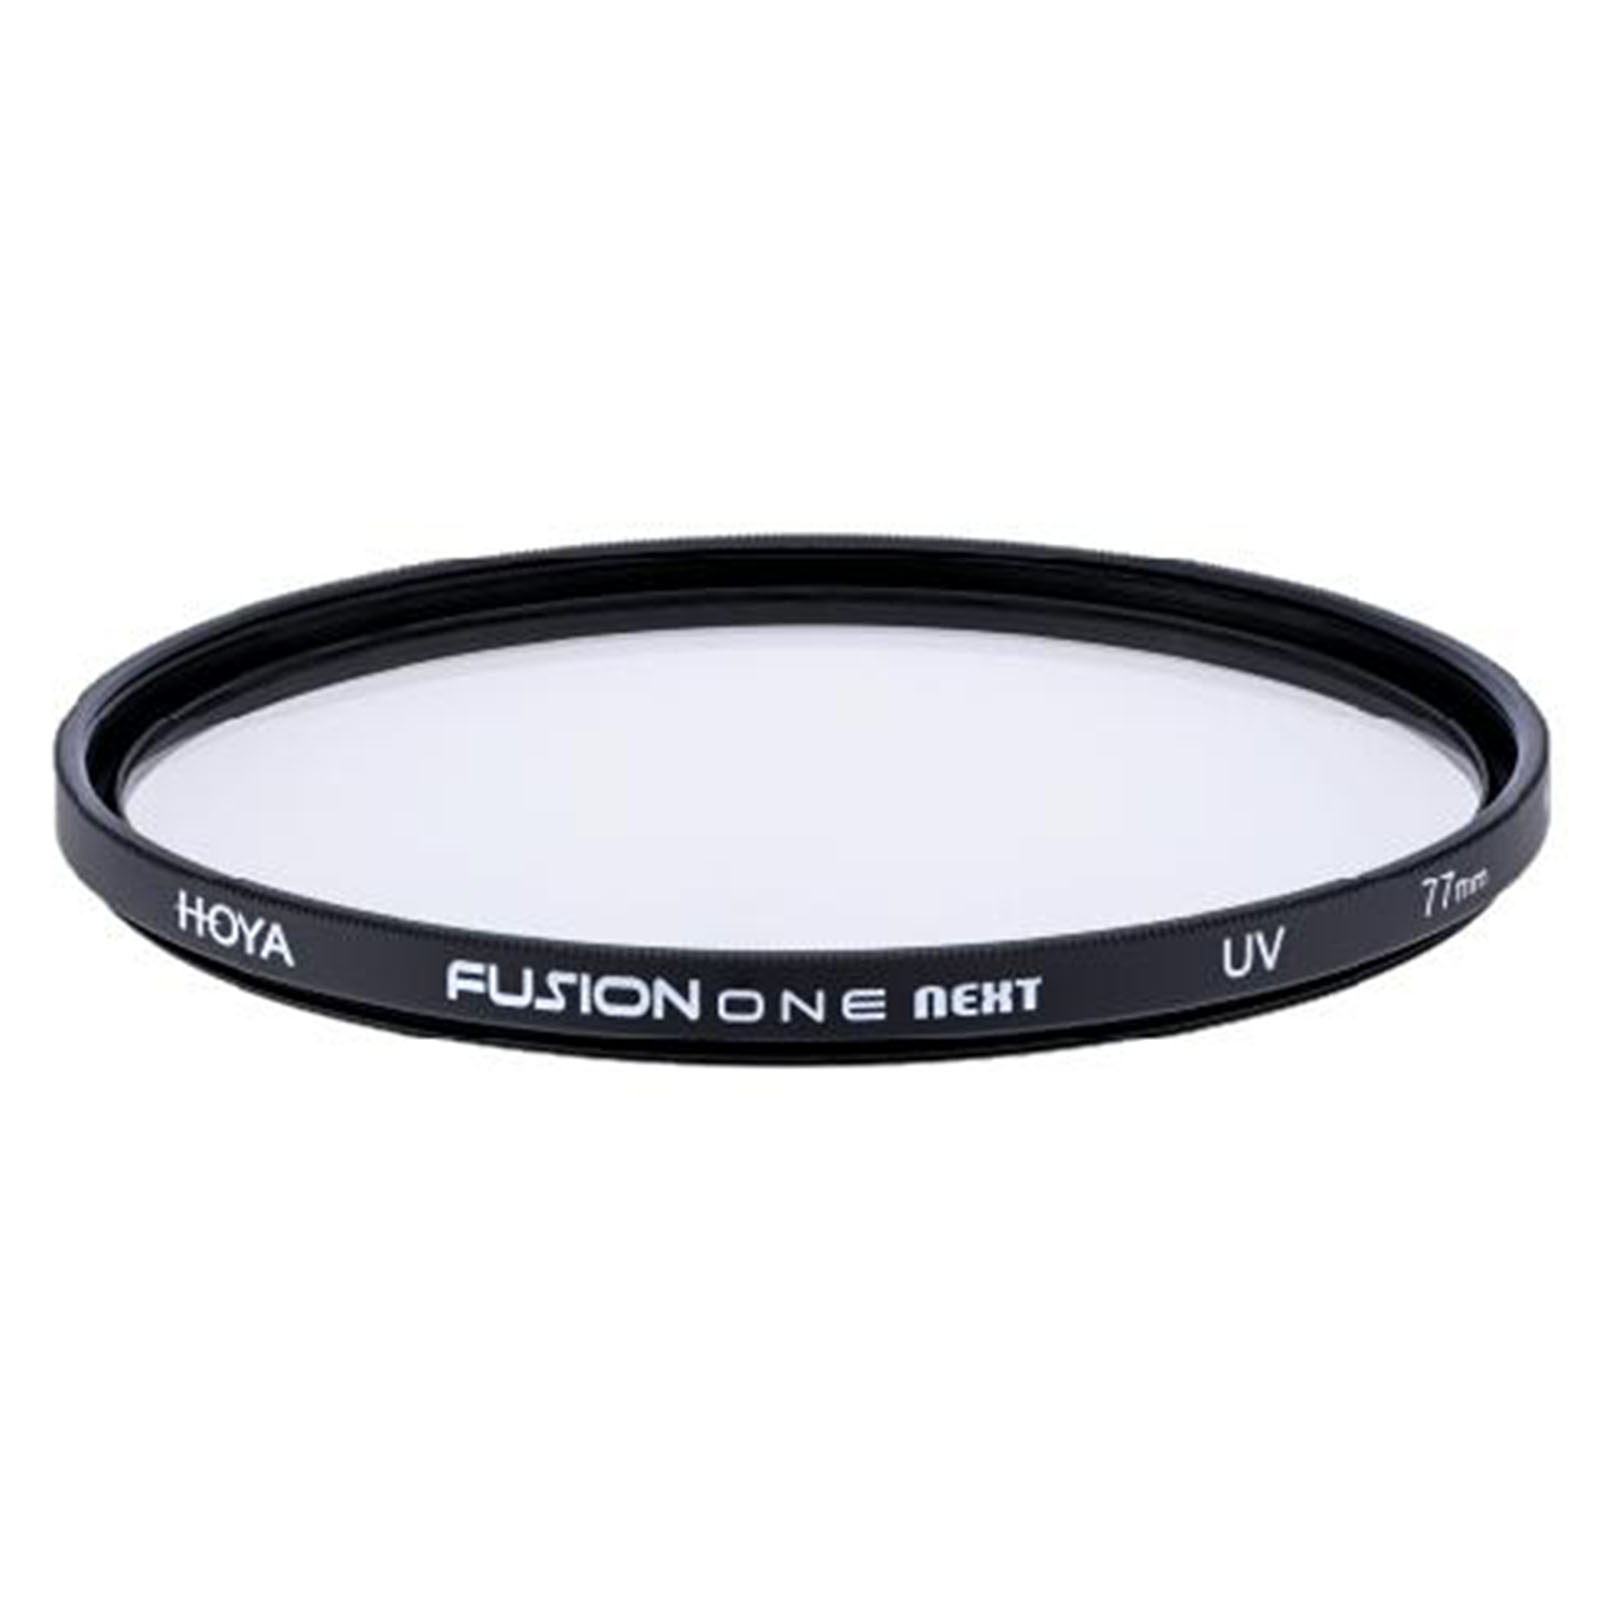 Image of Hoya 37mm Fusion One Next UV Filter